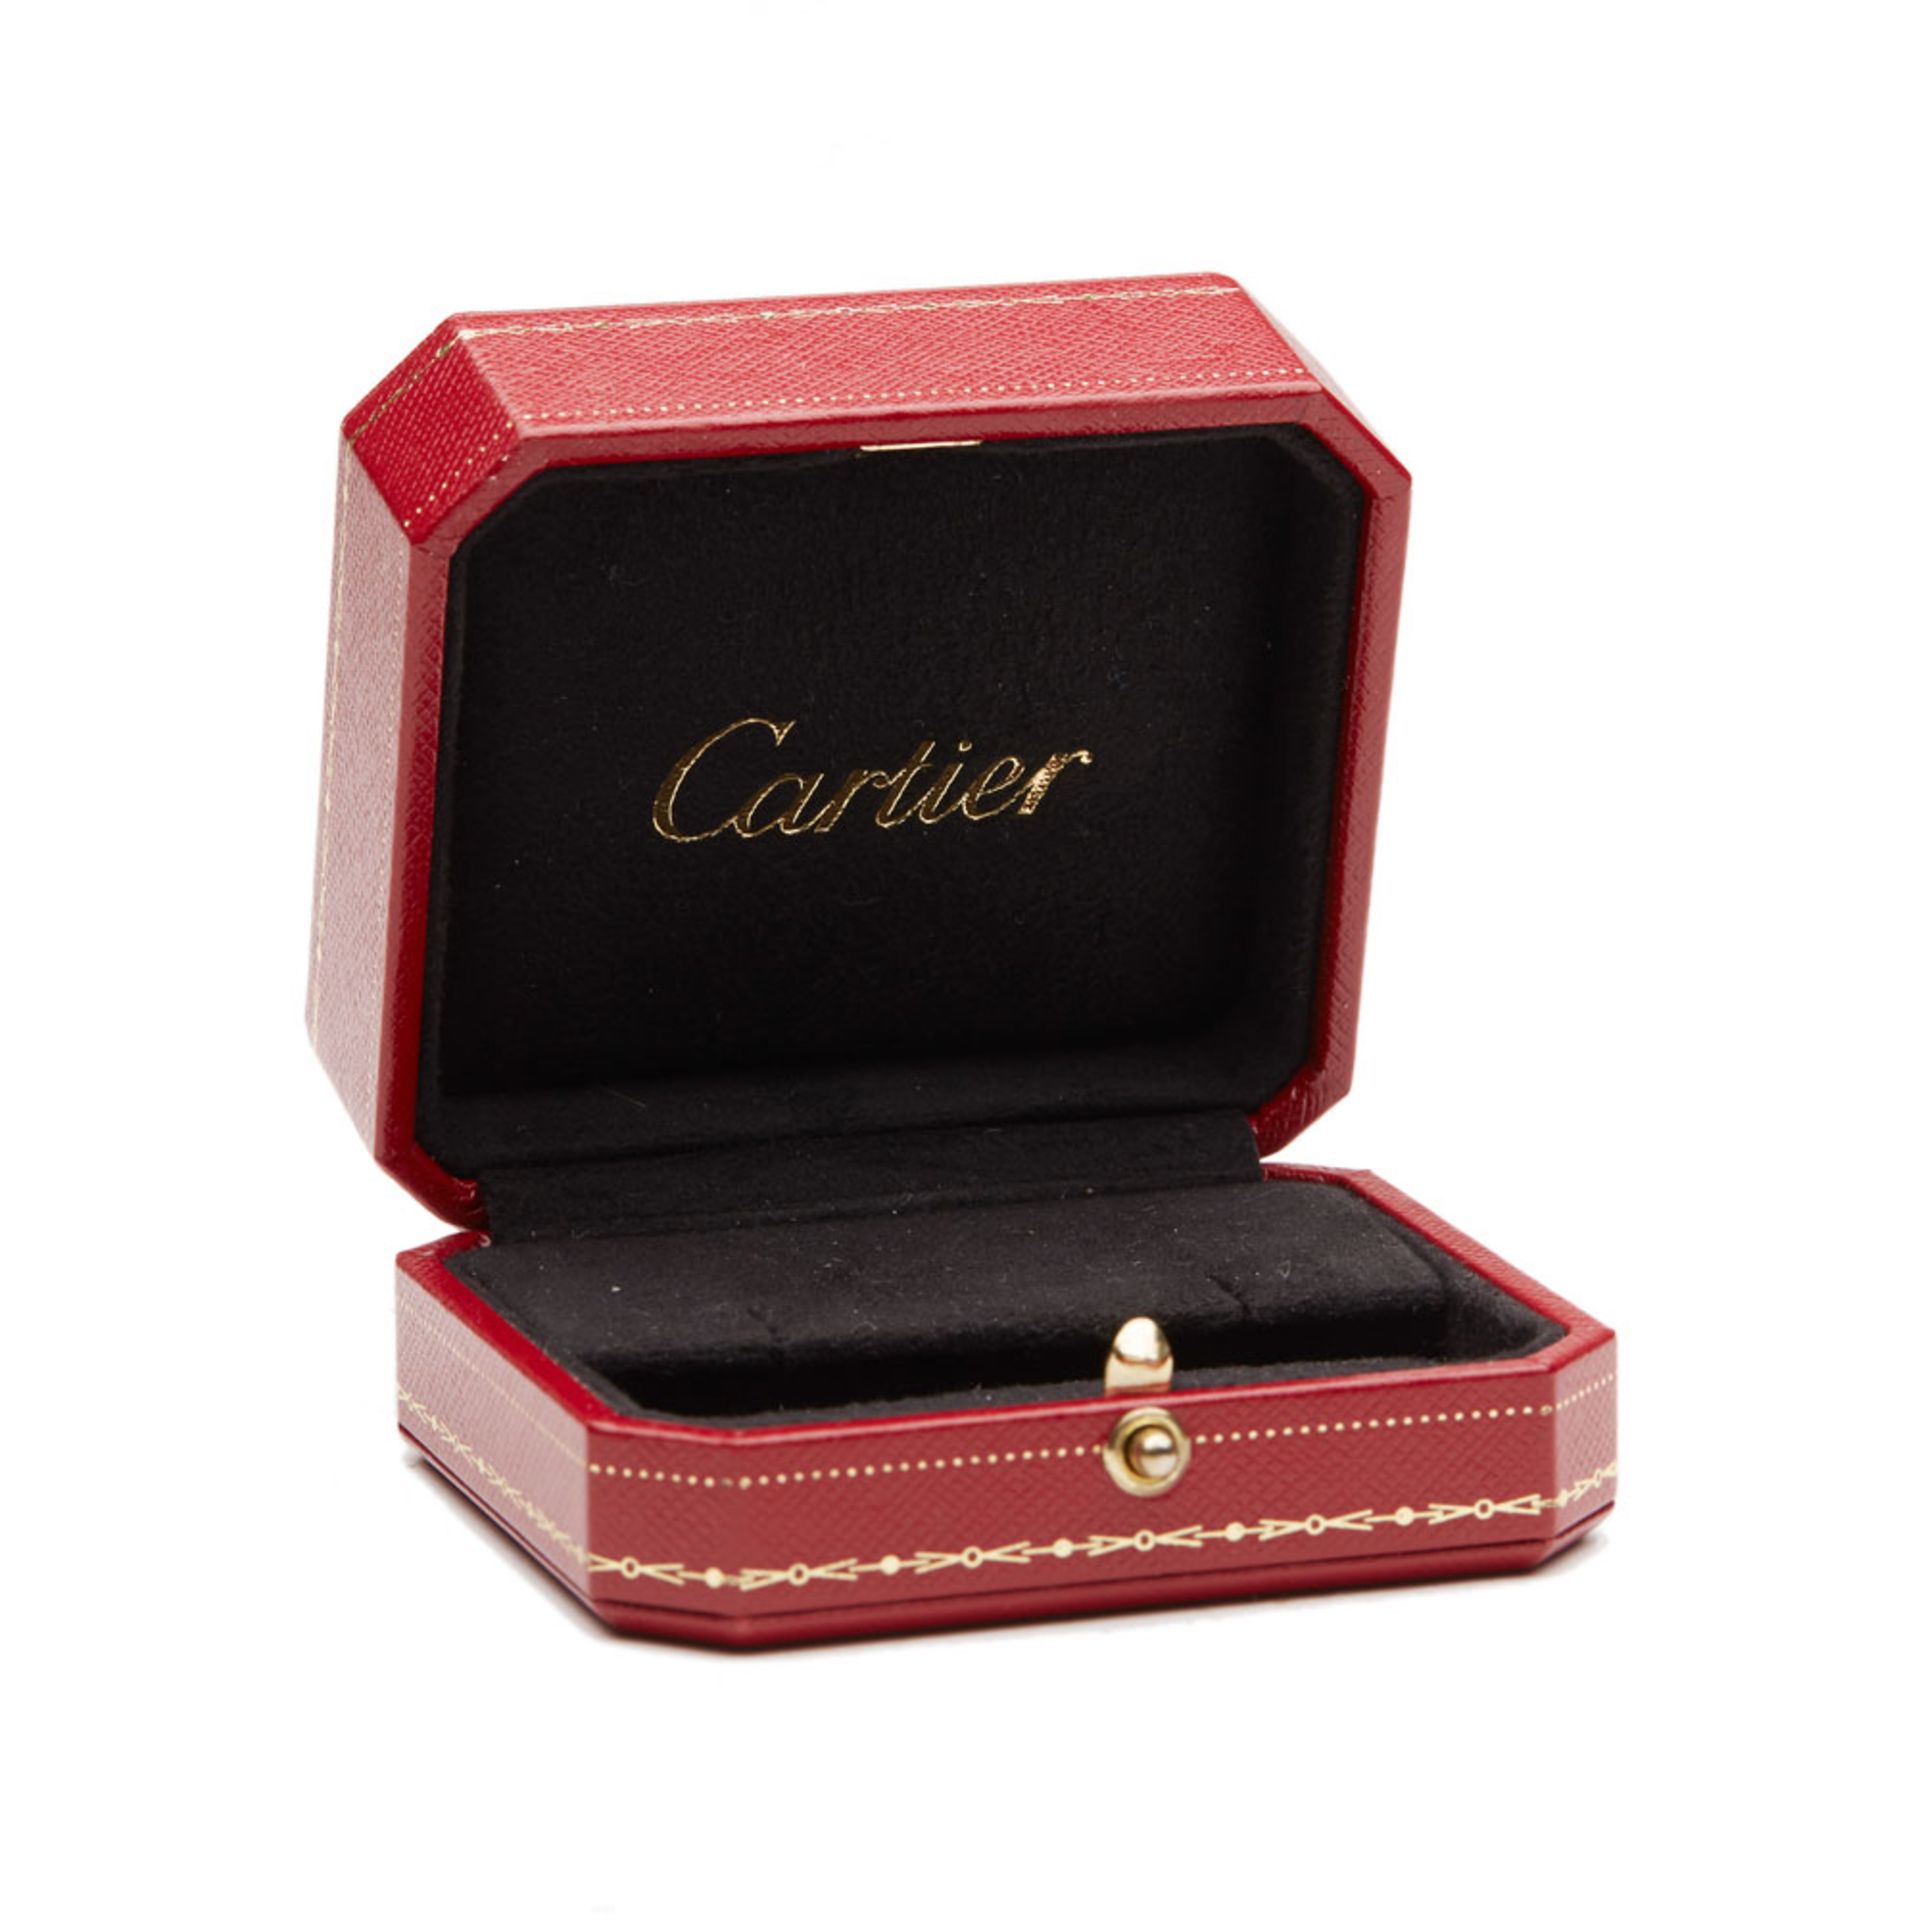 Cartier 18k Yellow Gold Double Hoop Diamond Earrings - Image 10 of 10